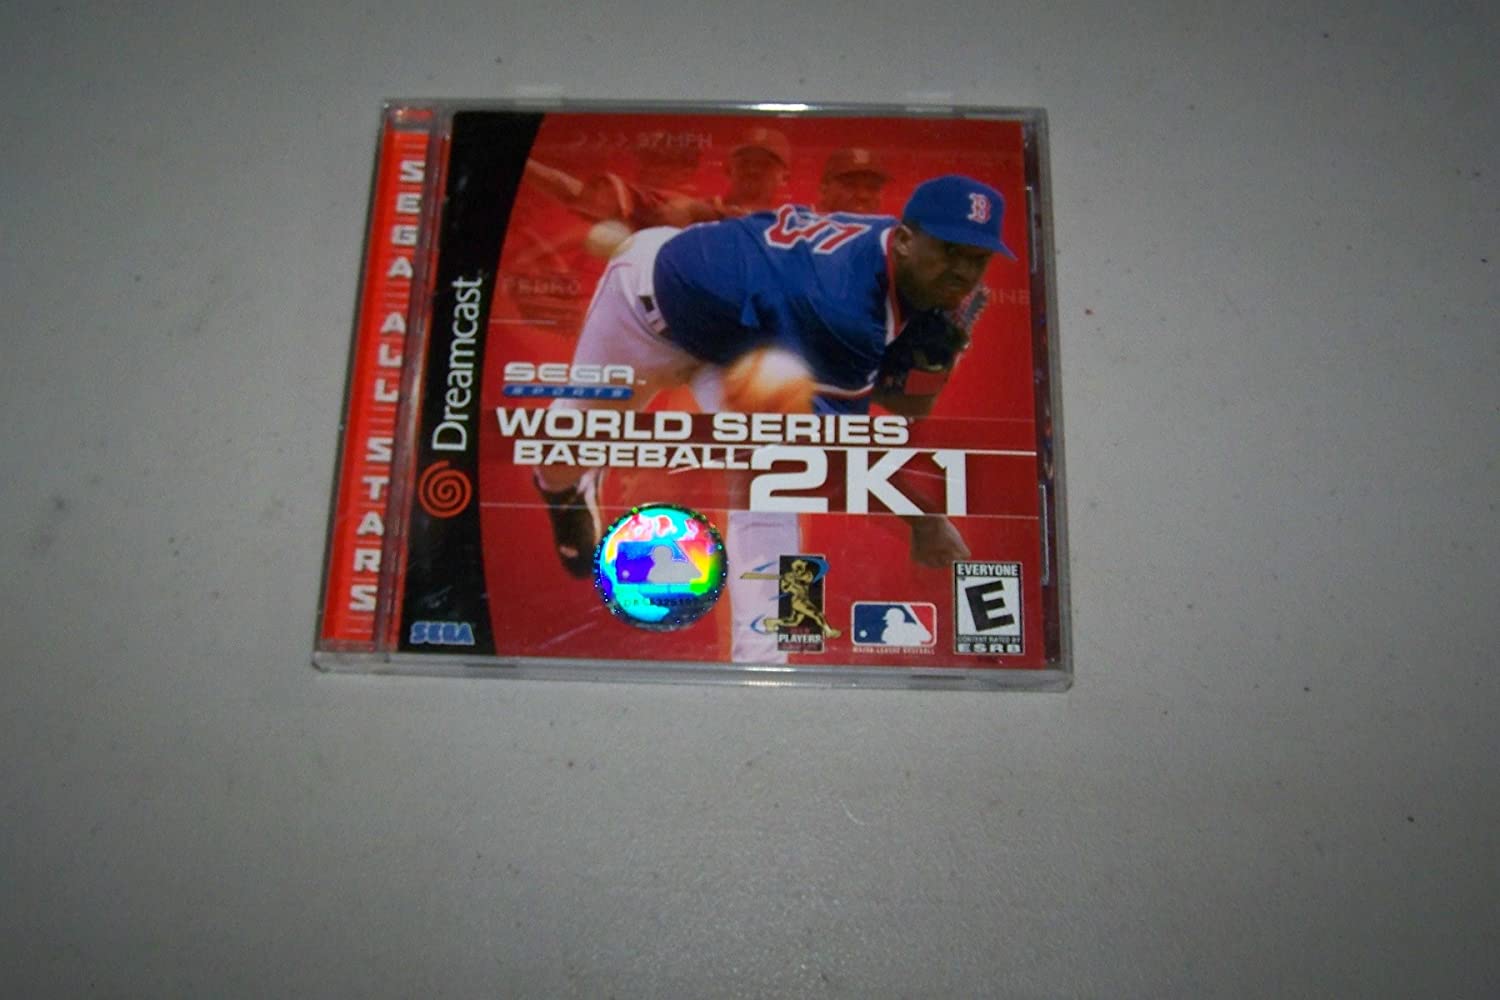 World Series Baseball 2K1 - Darkside Records